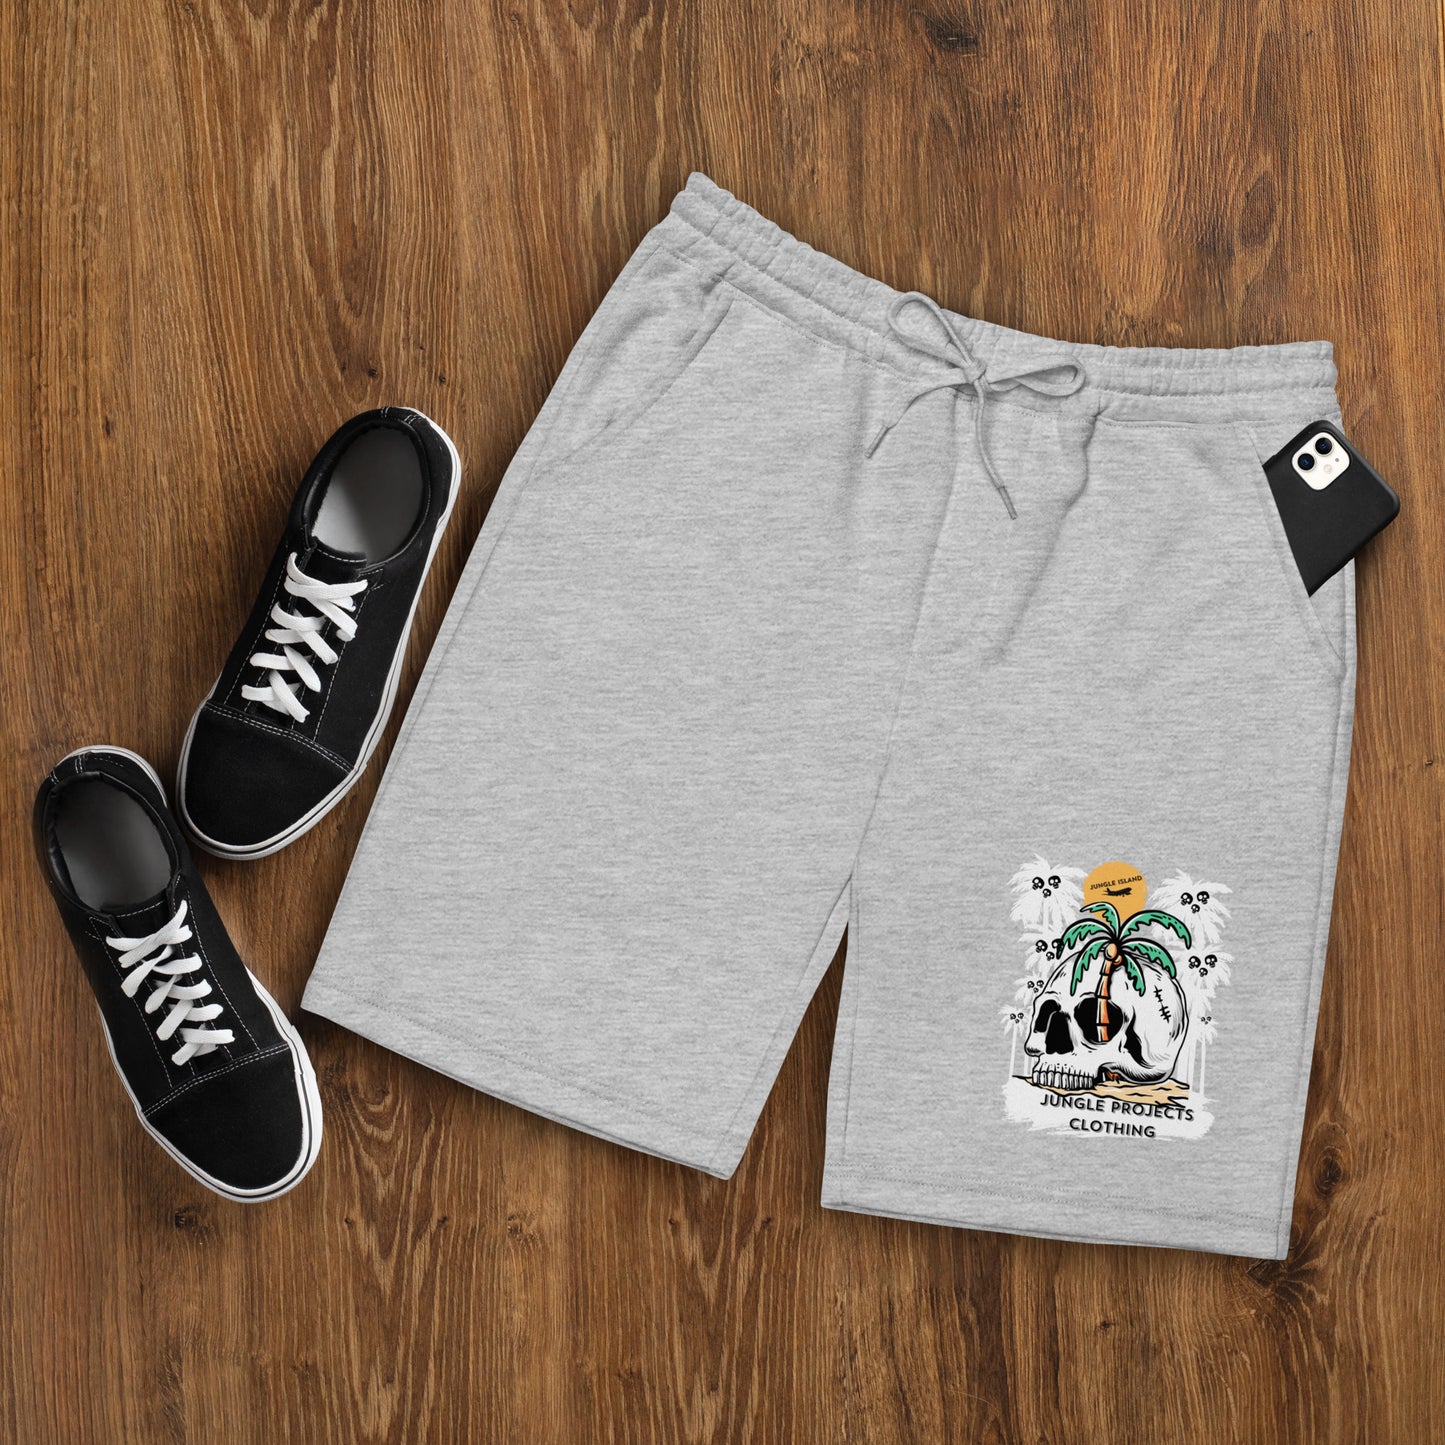 Jungle Island shorts